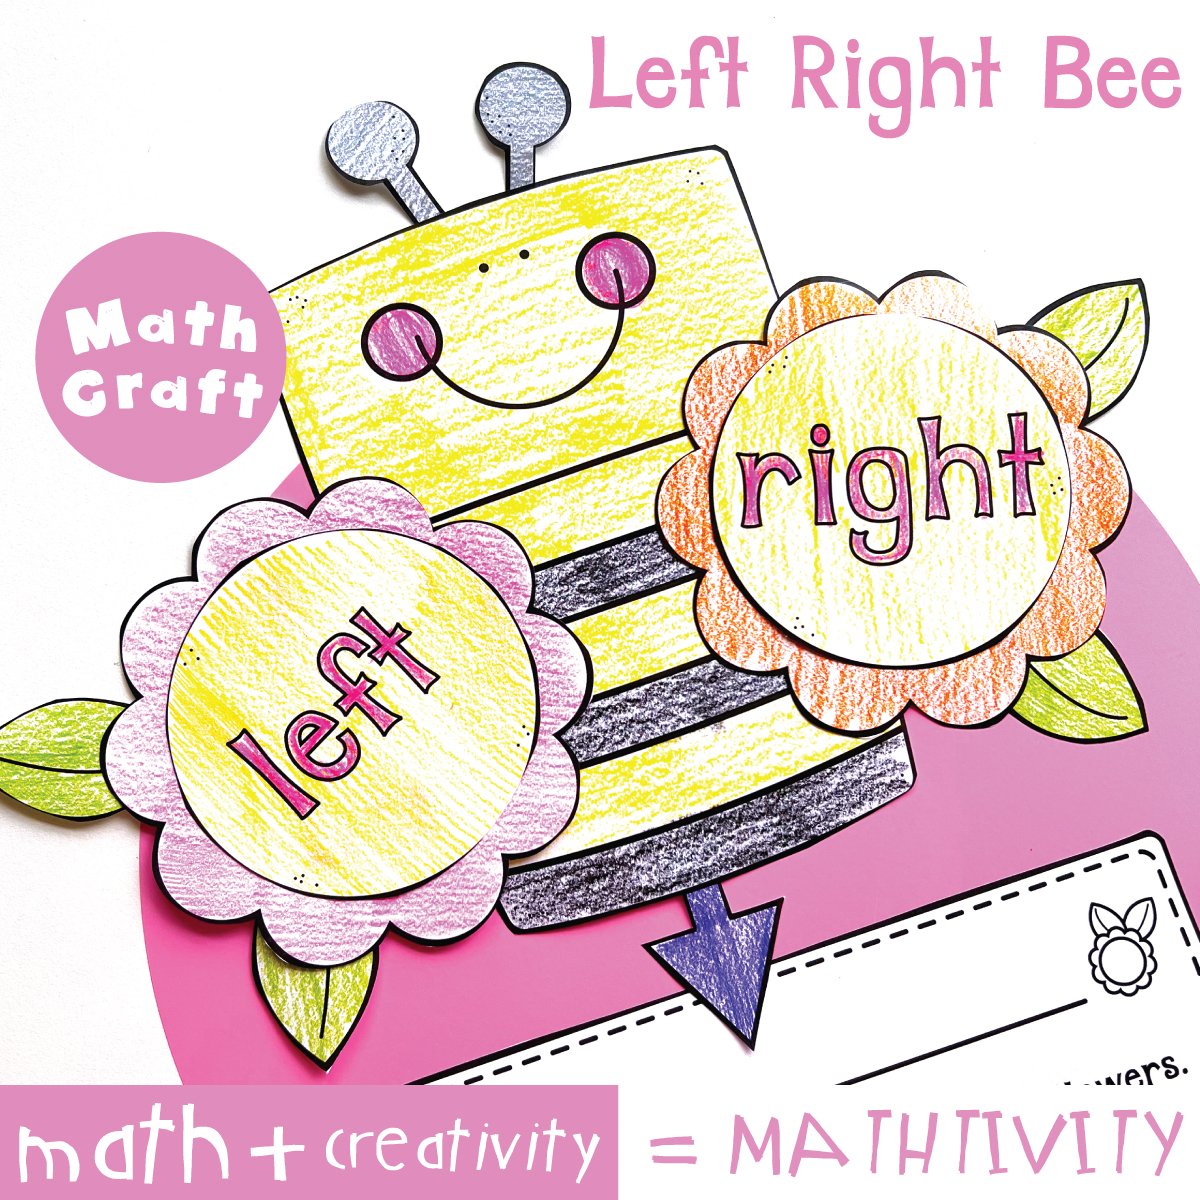 Math Craft Left Right